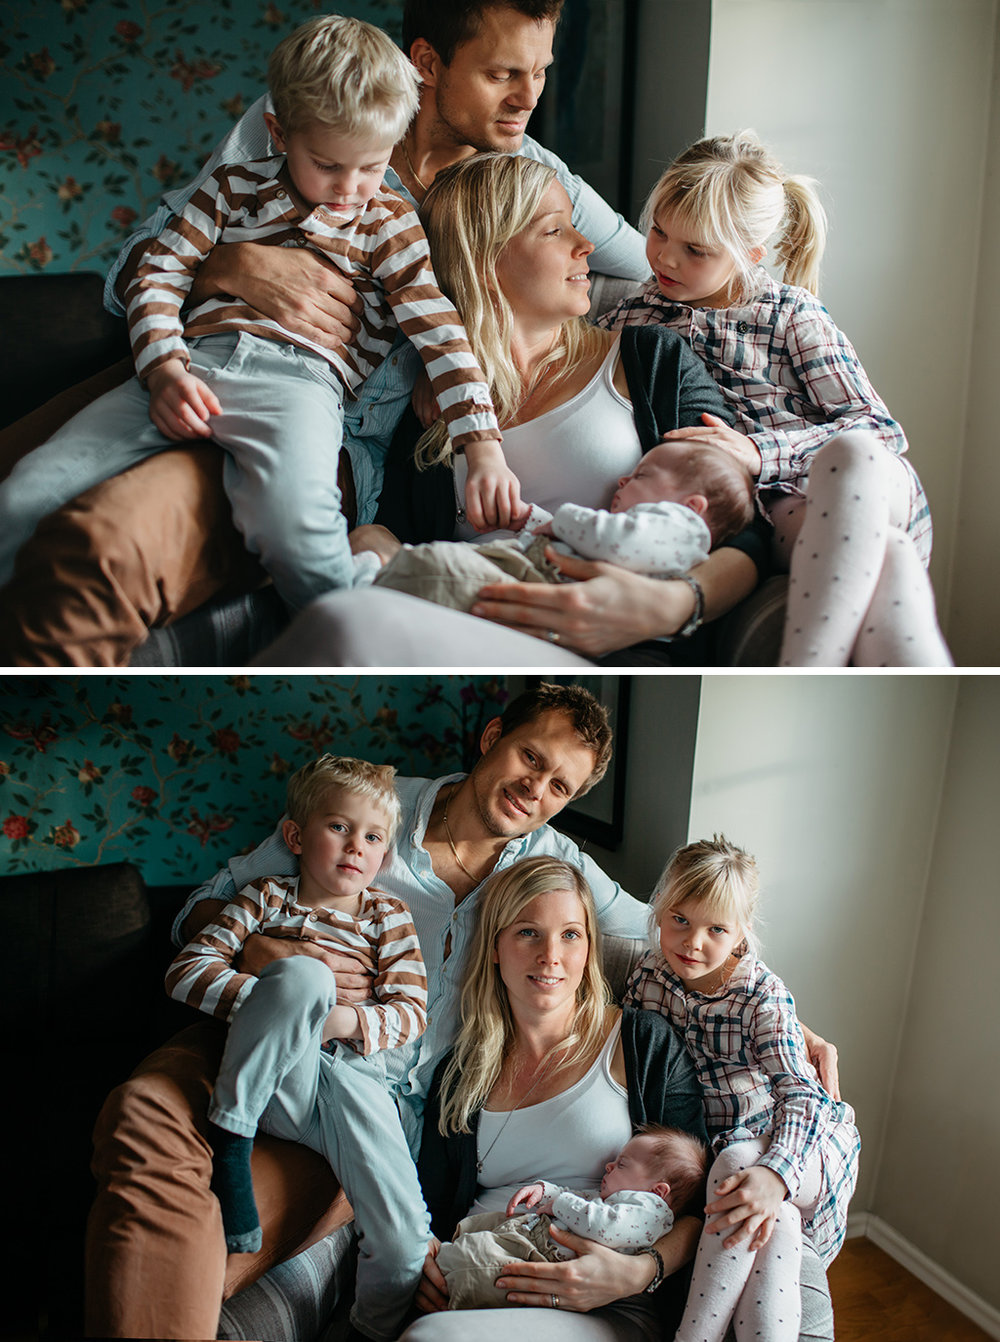 Nyfoddfotografering-lifestyle-familjefotografering-Stockholm-5.jpg